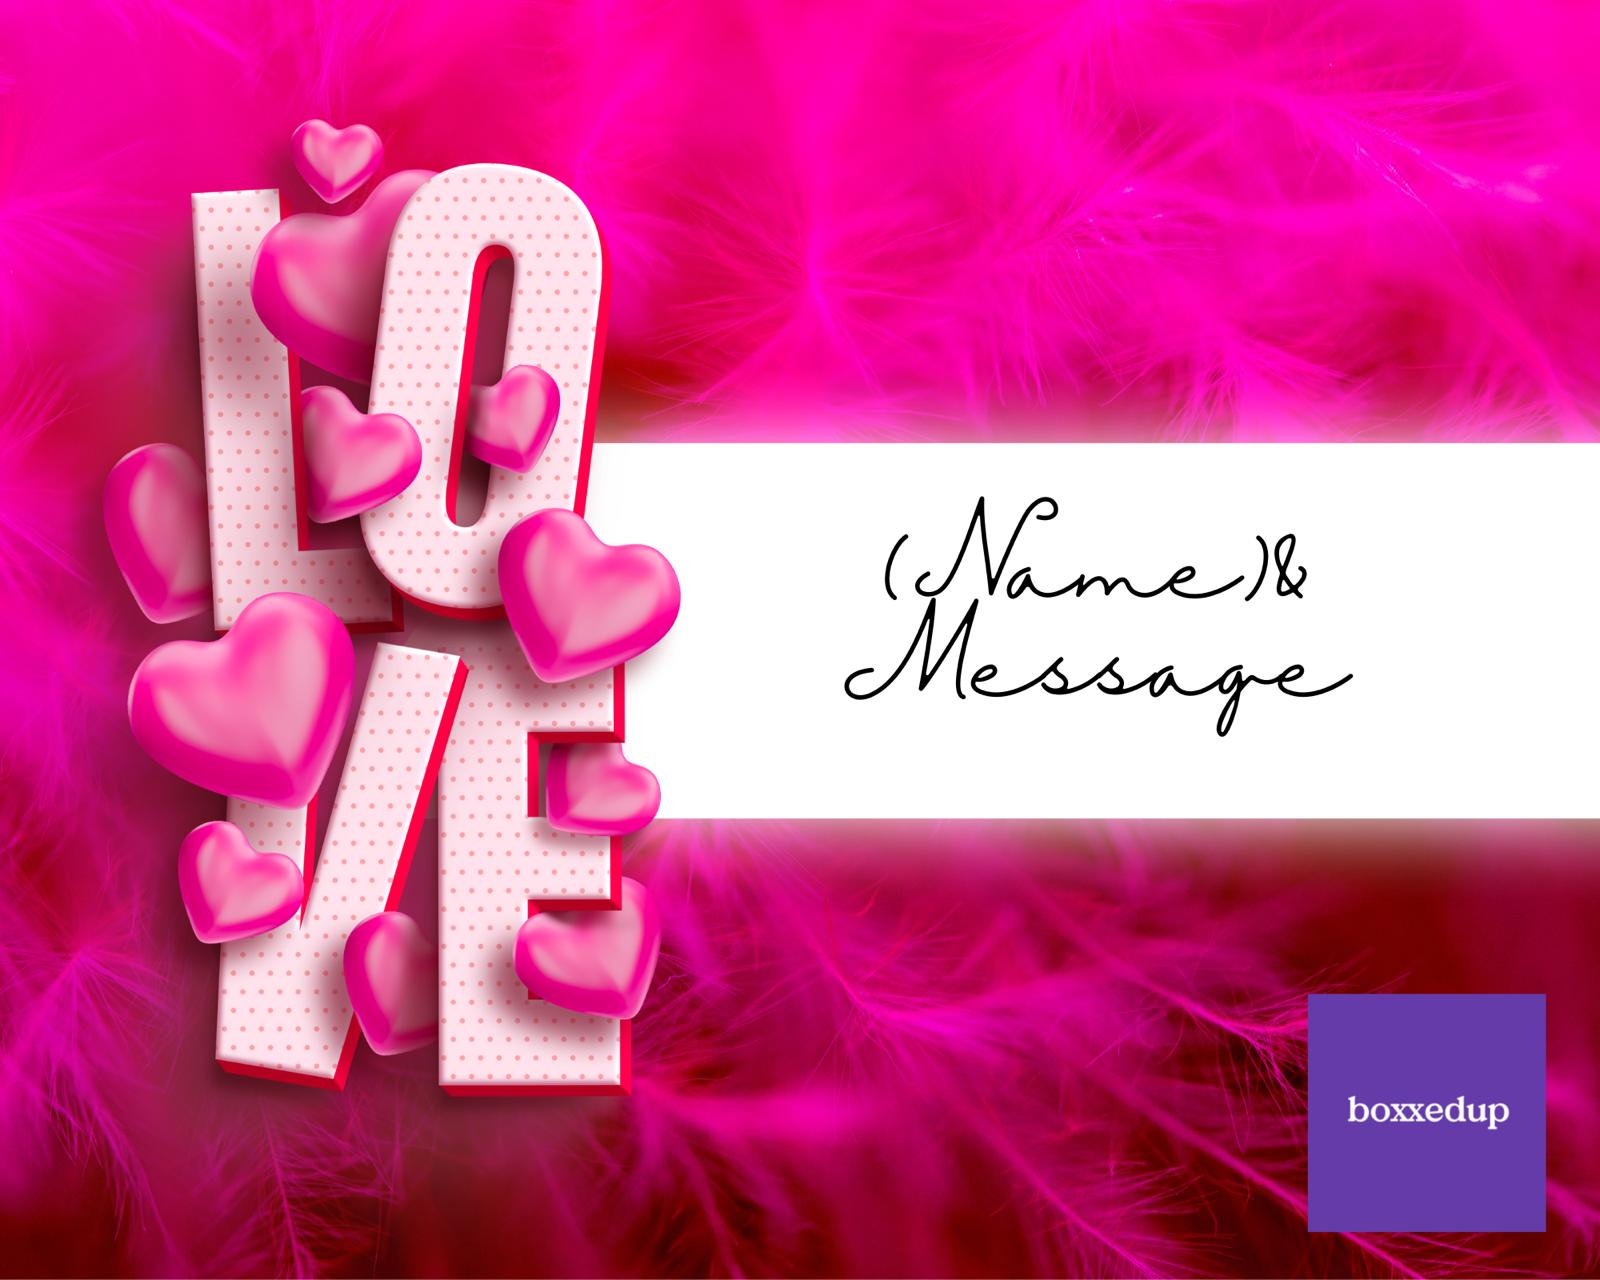 Emma Jones Valentines Fragrance and Prosecco Box